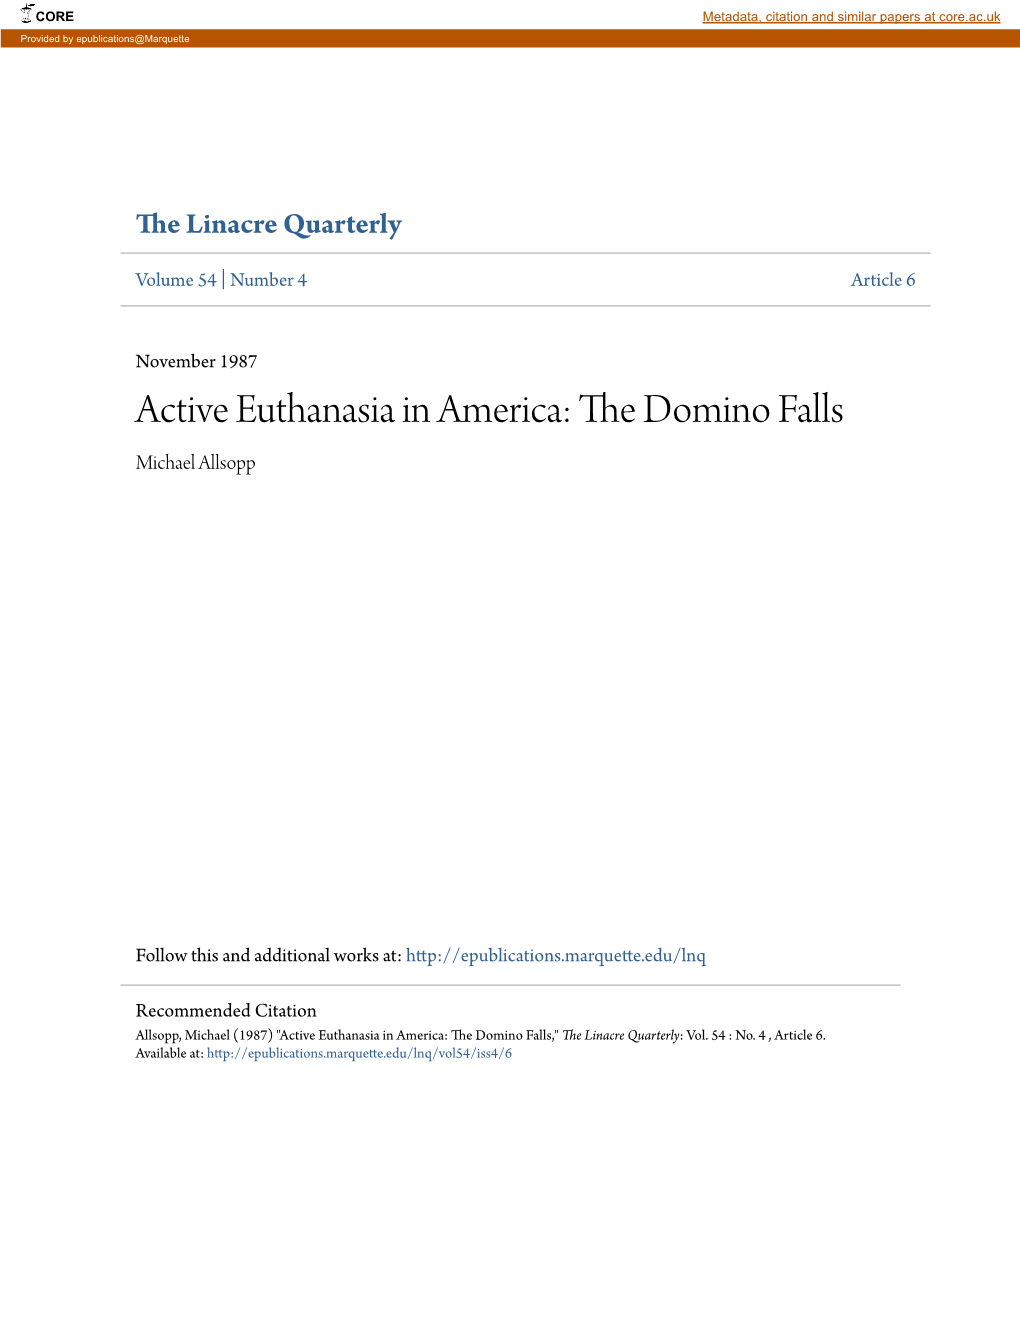 Active Euthanasia in America: the Ominod Falls Michael Allsopp